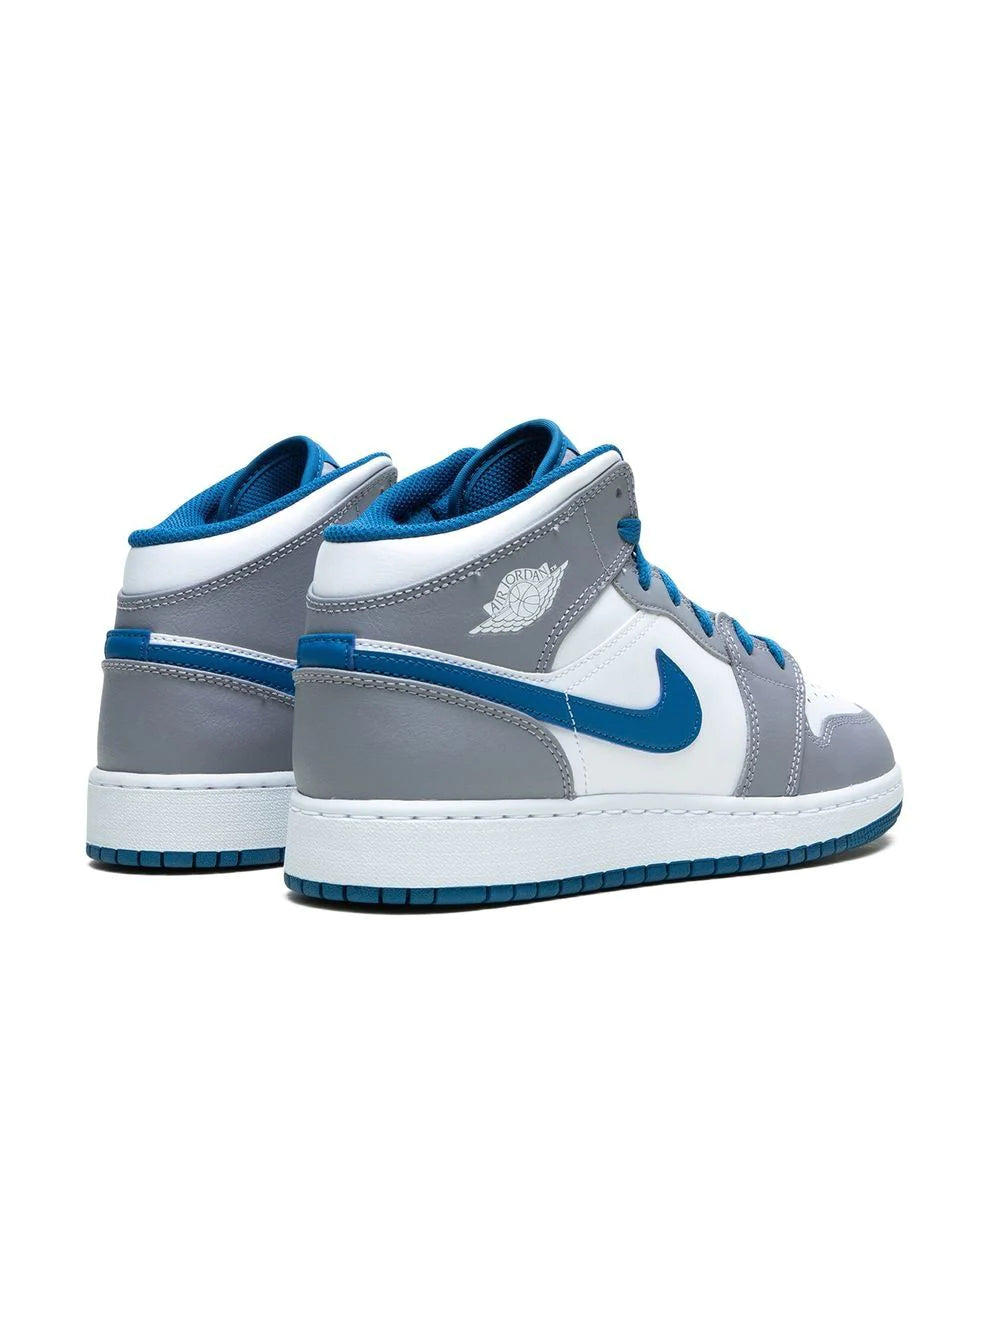 Nike Air Jordan 1 Mid Cement/True Blue